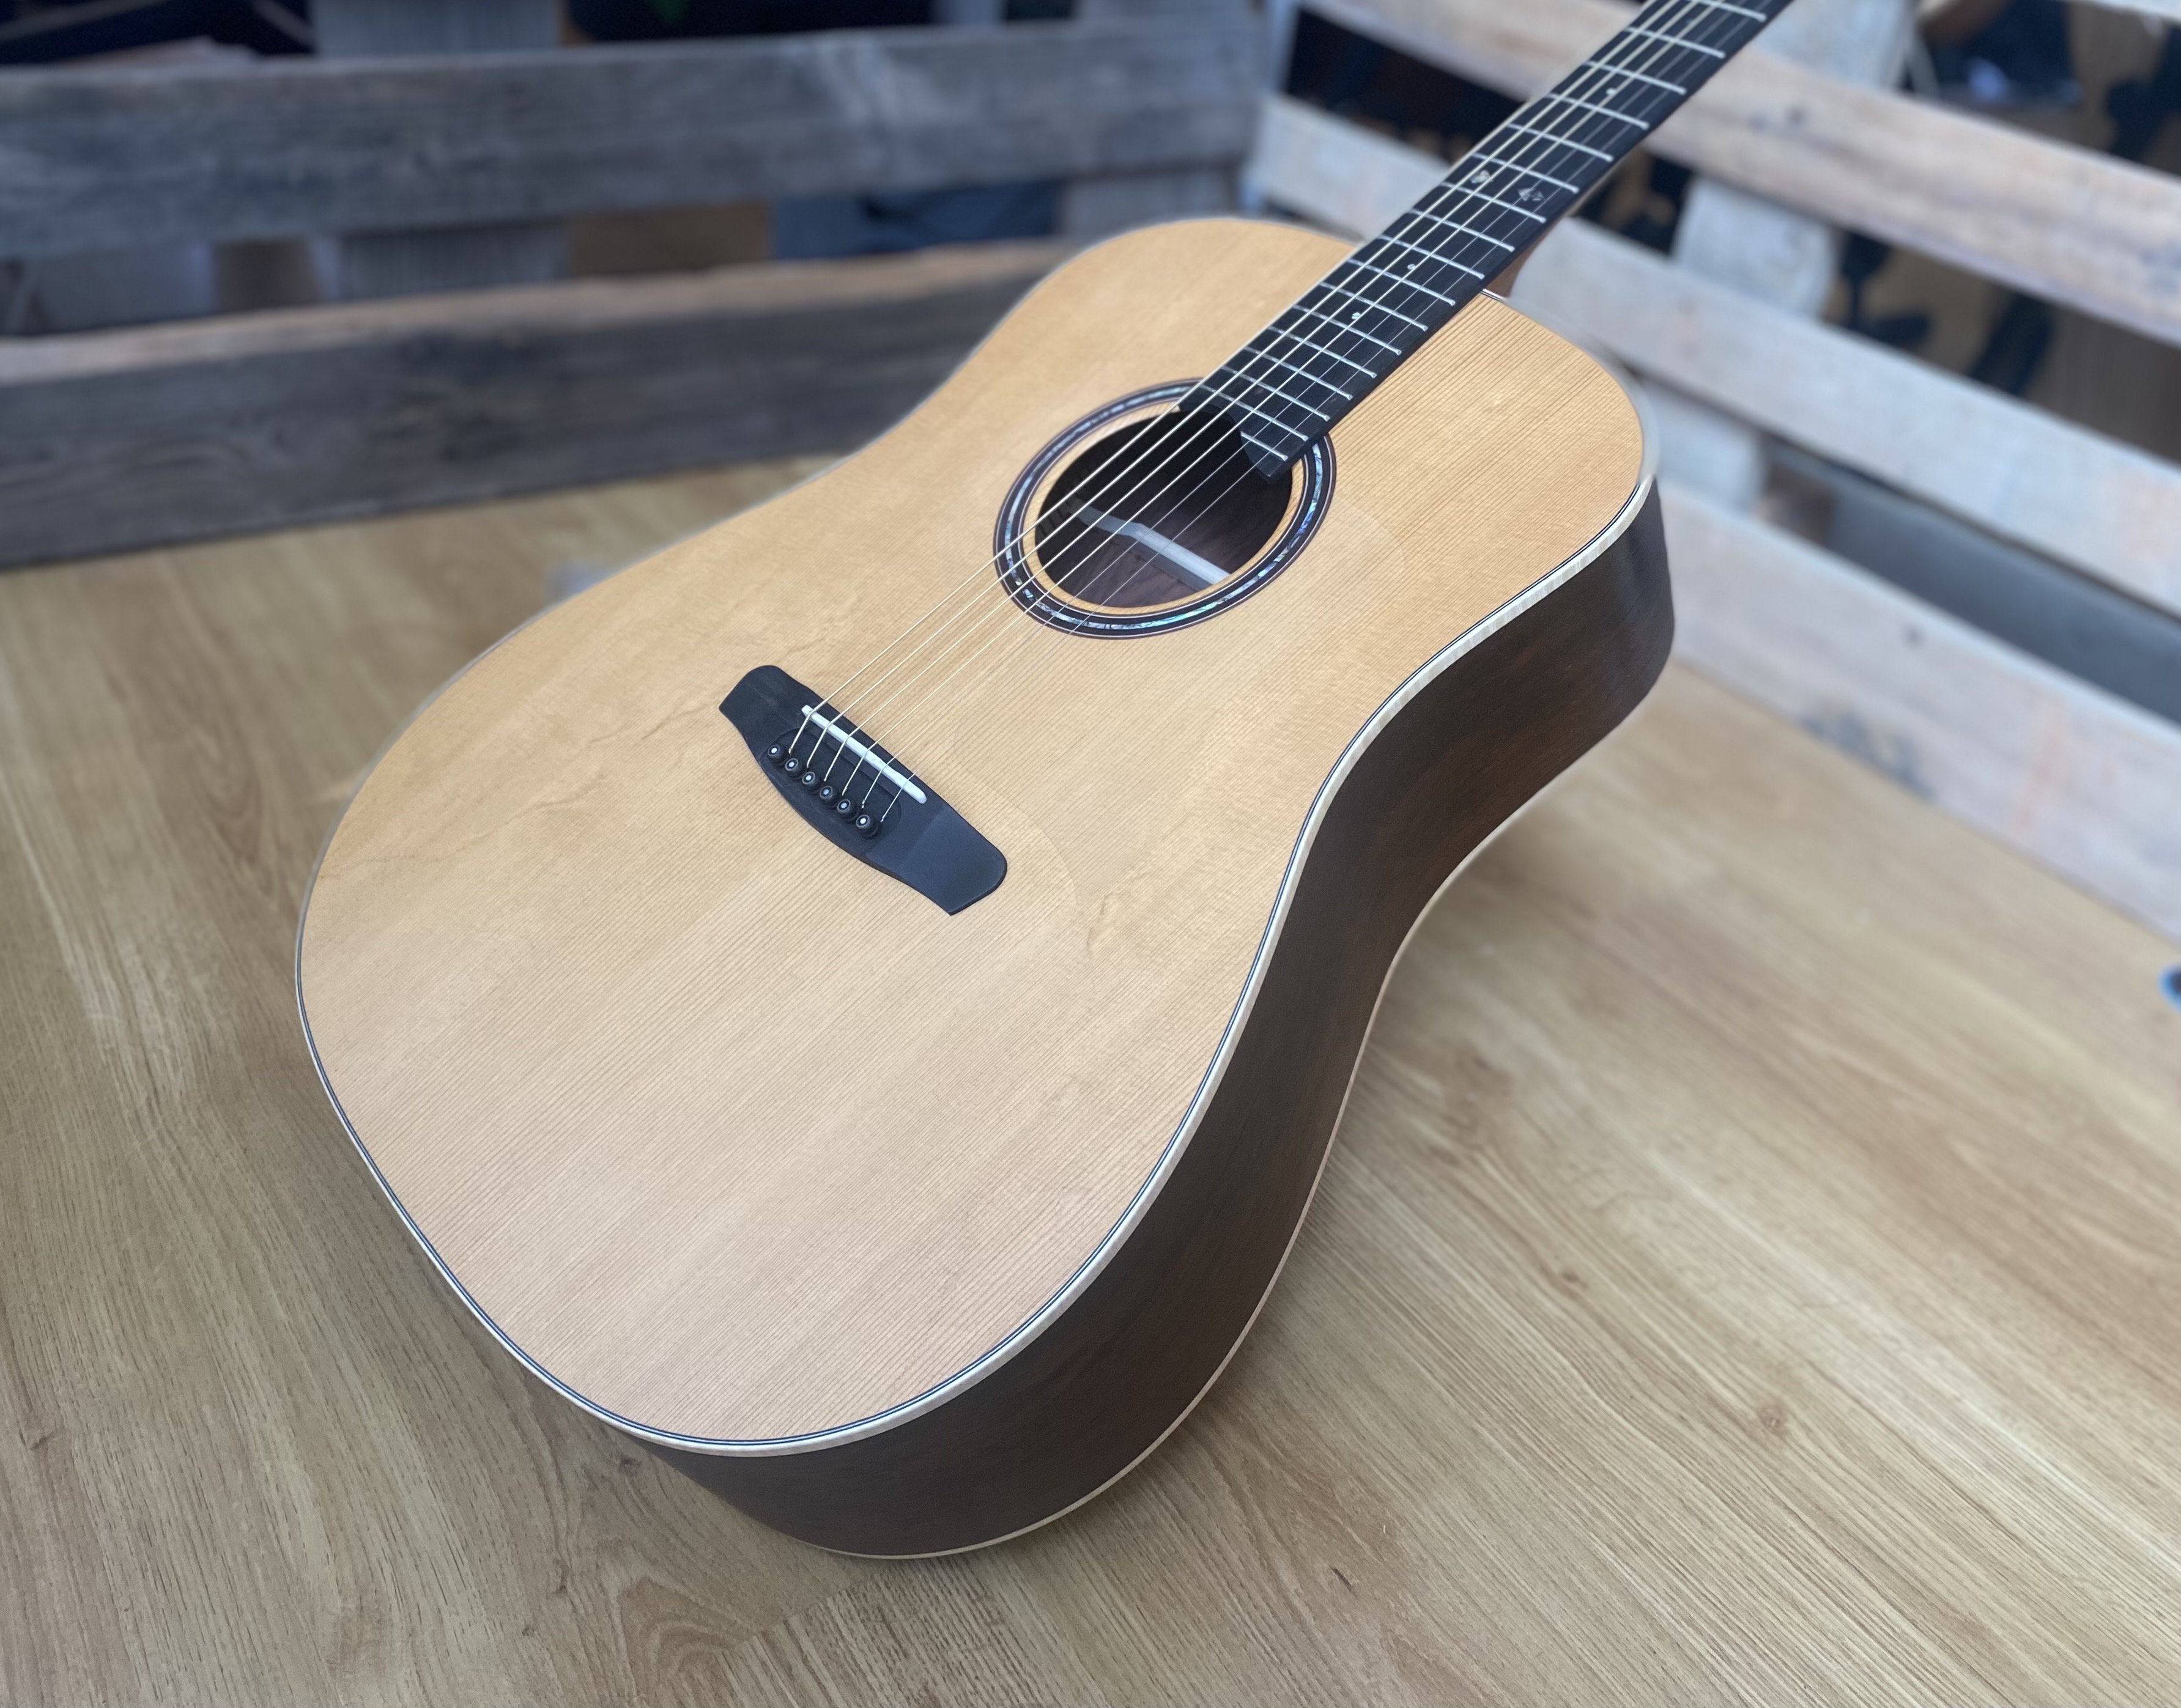 Dowina Master Build Madagascar Rosewood 1 of 6, Acoustic Guitar for sale at Richards Guitars.